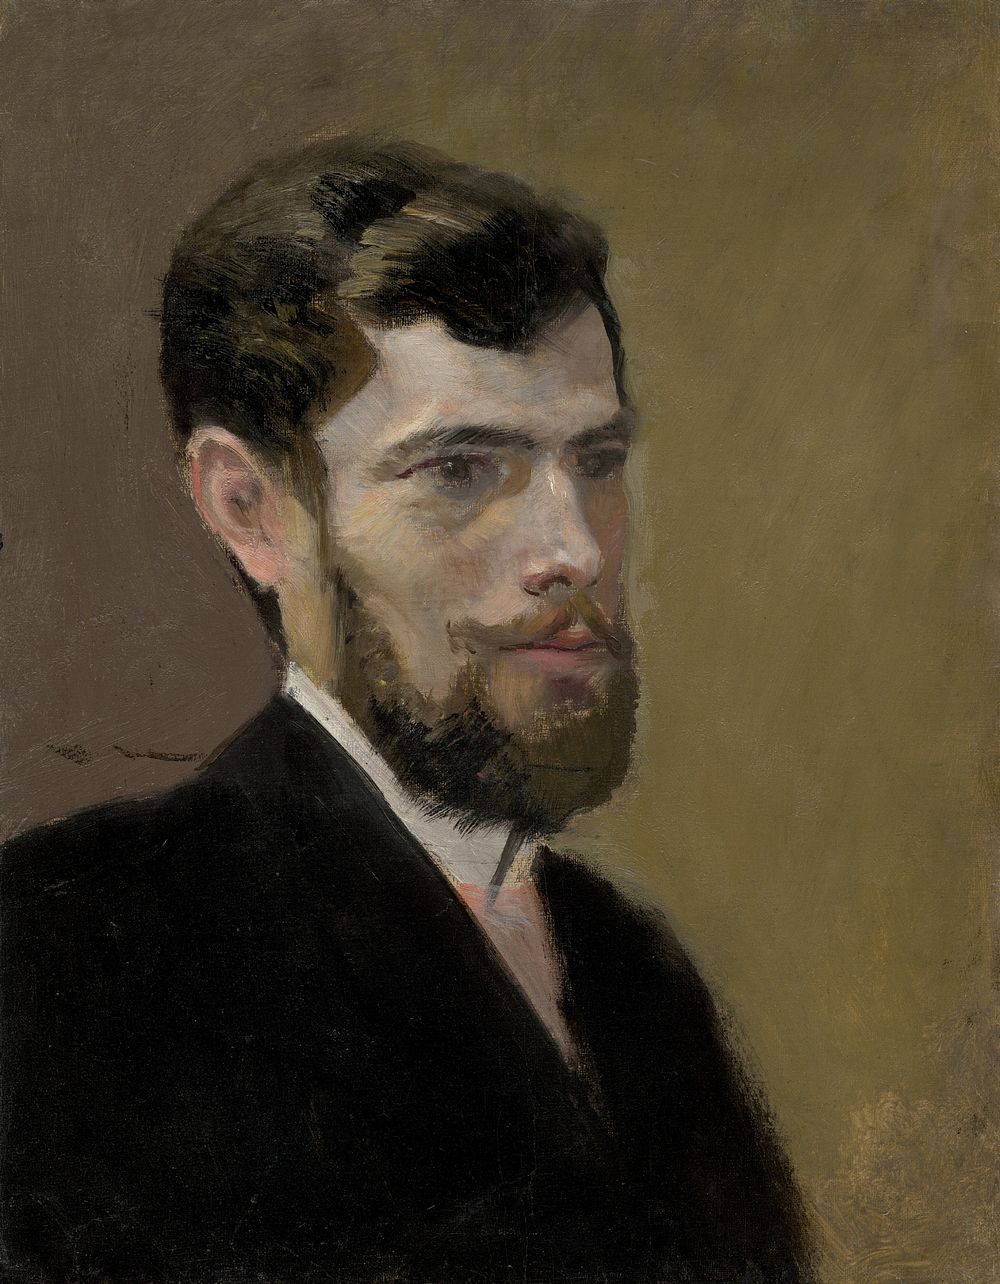 Study of a bearded man in a black suit by Ladislav Mednyánszky